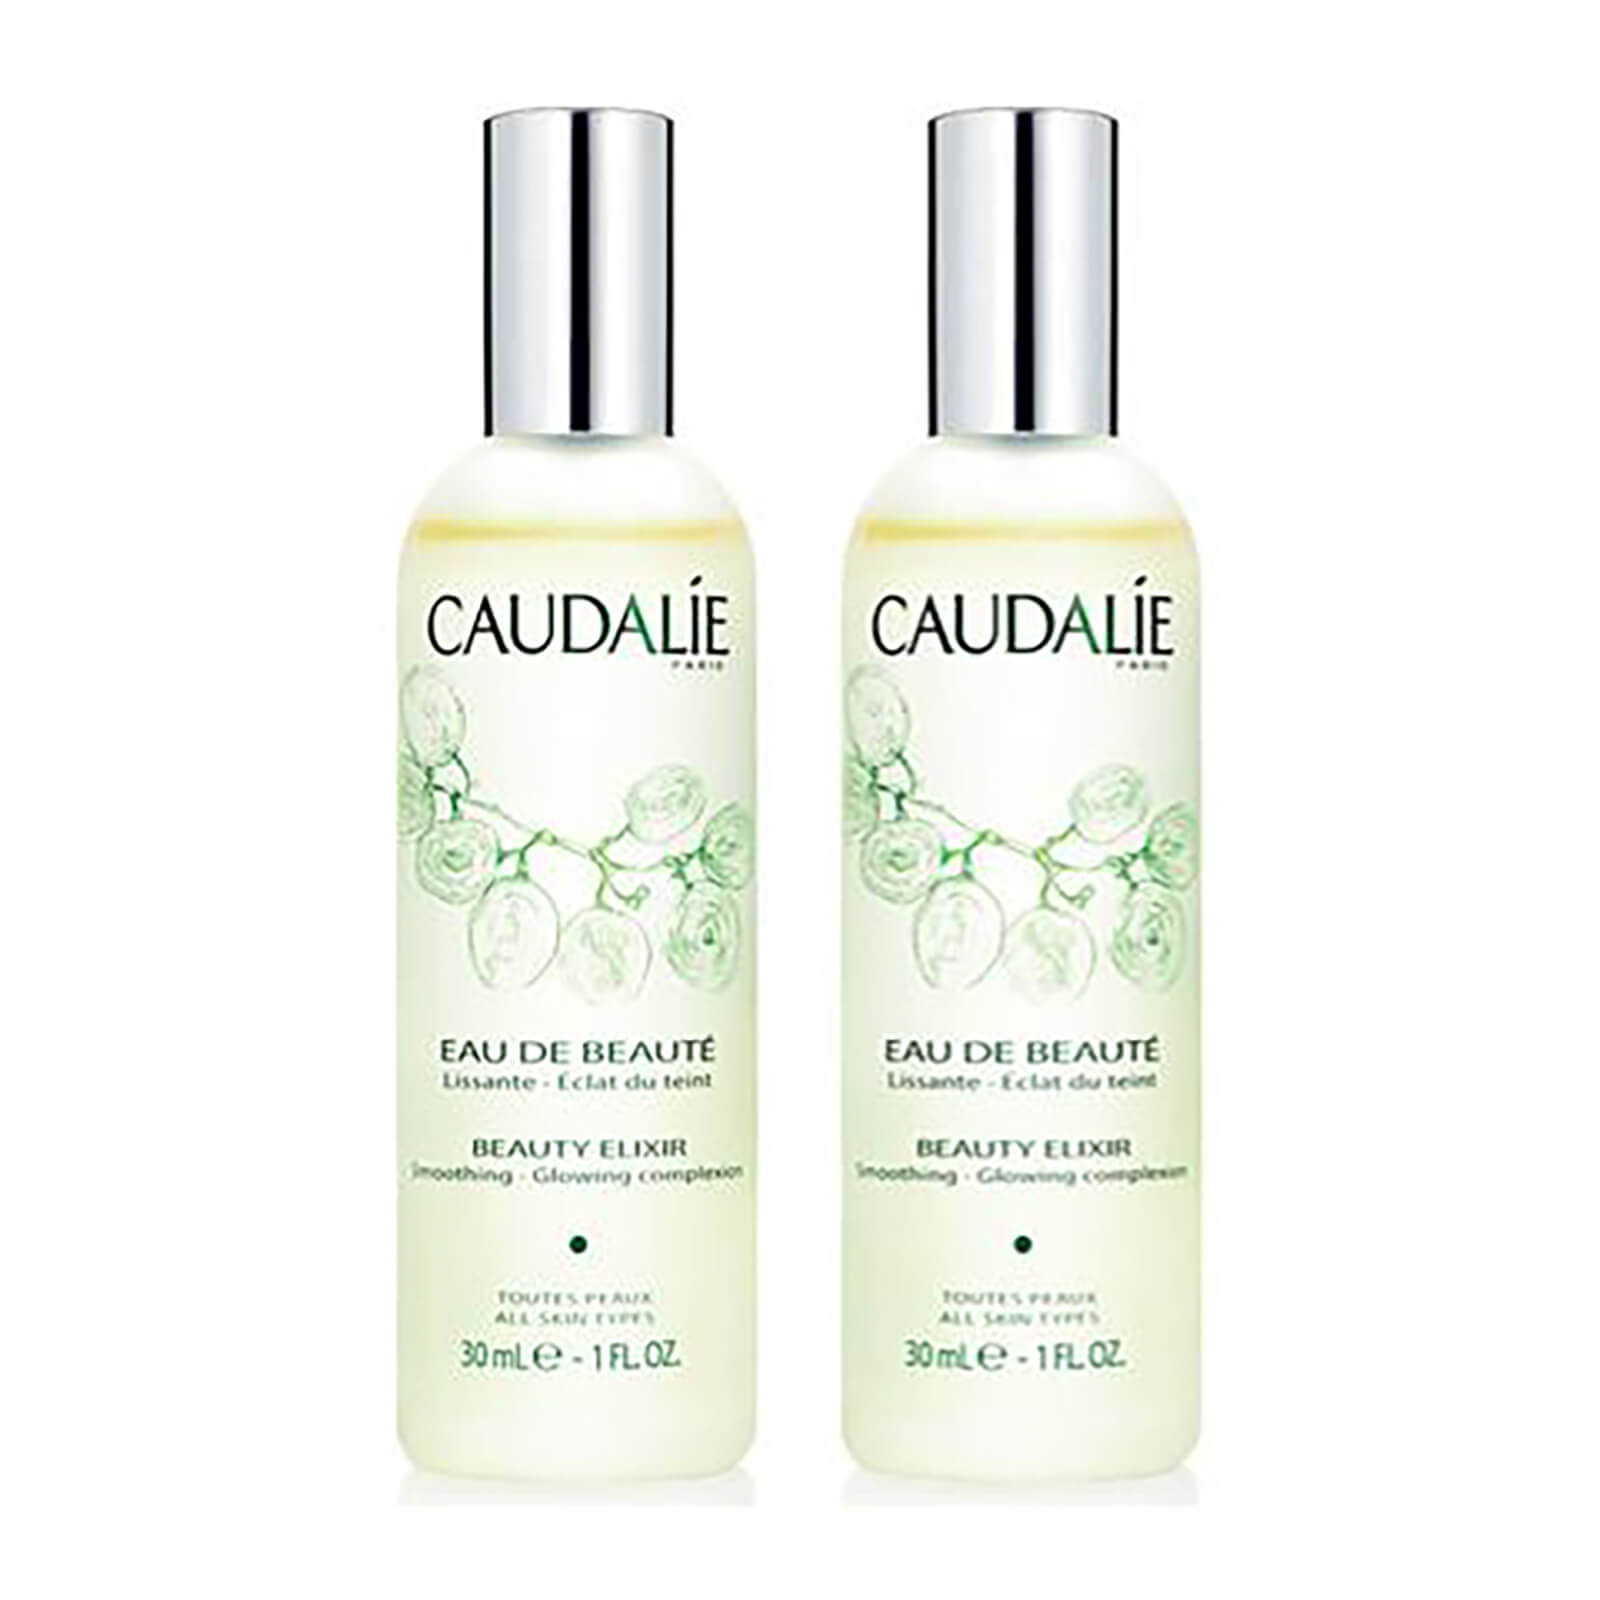 Image of Caudalie Beauty Elixir Duo 30ml (Worth £24)